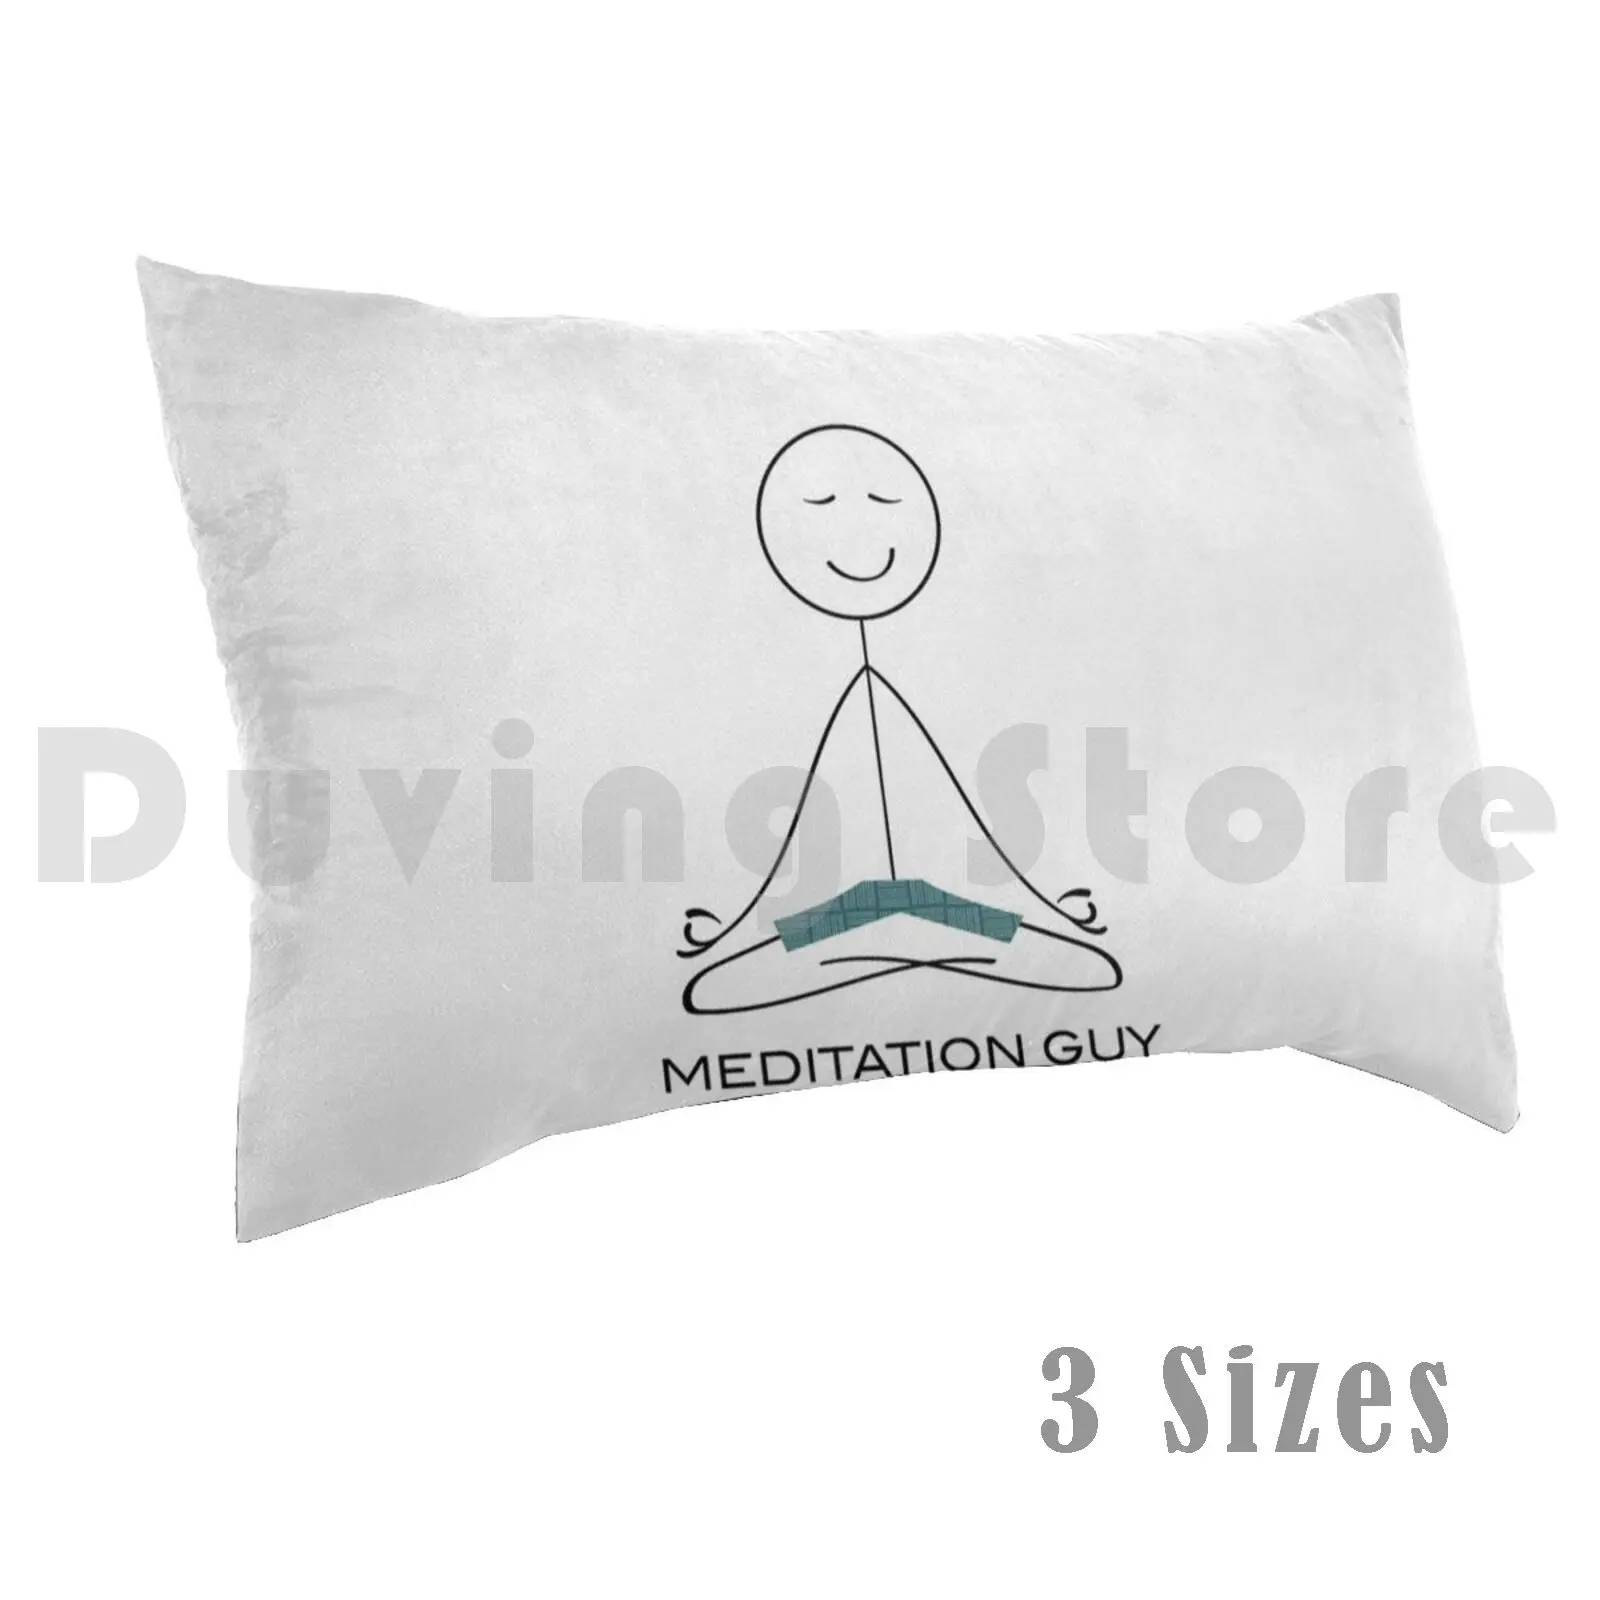 

Funny Mens Meditation Guy Pillow Case DIY 40x60 3171 Meditation Guy Boys Meditation Men Meditation Male